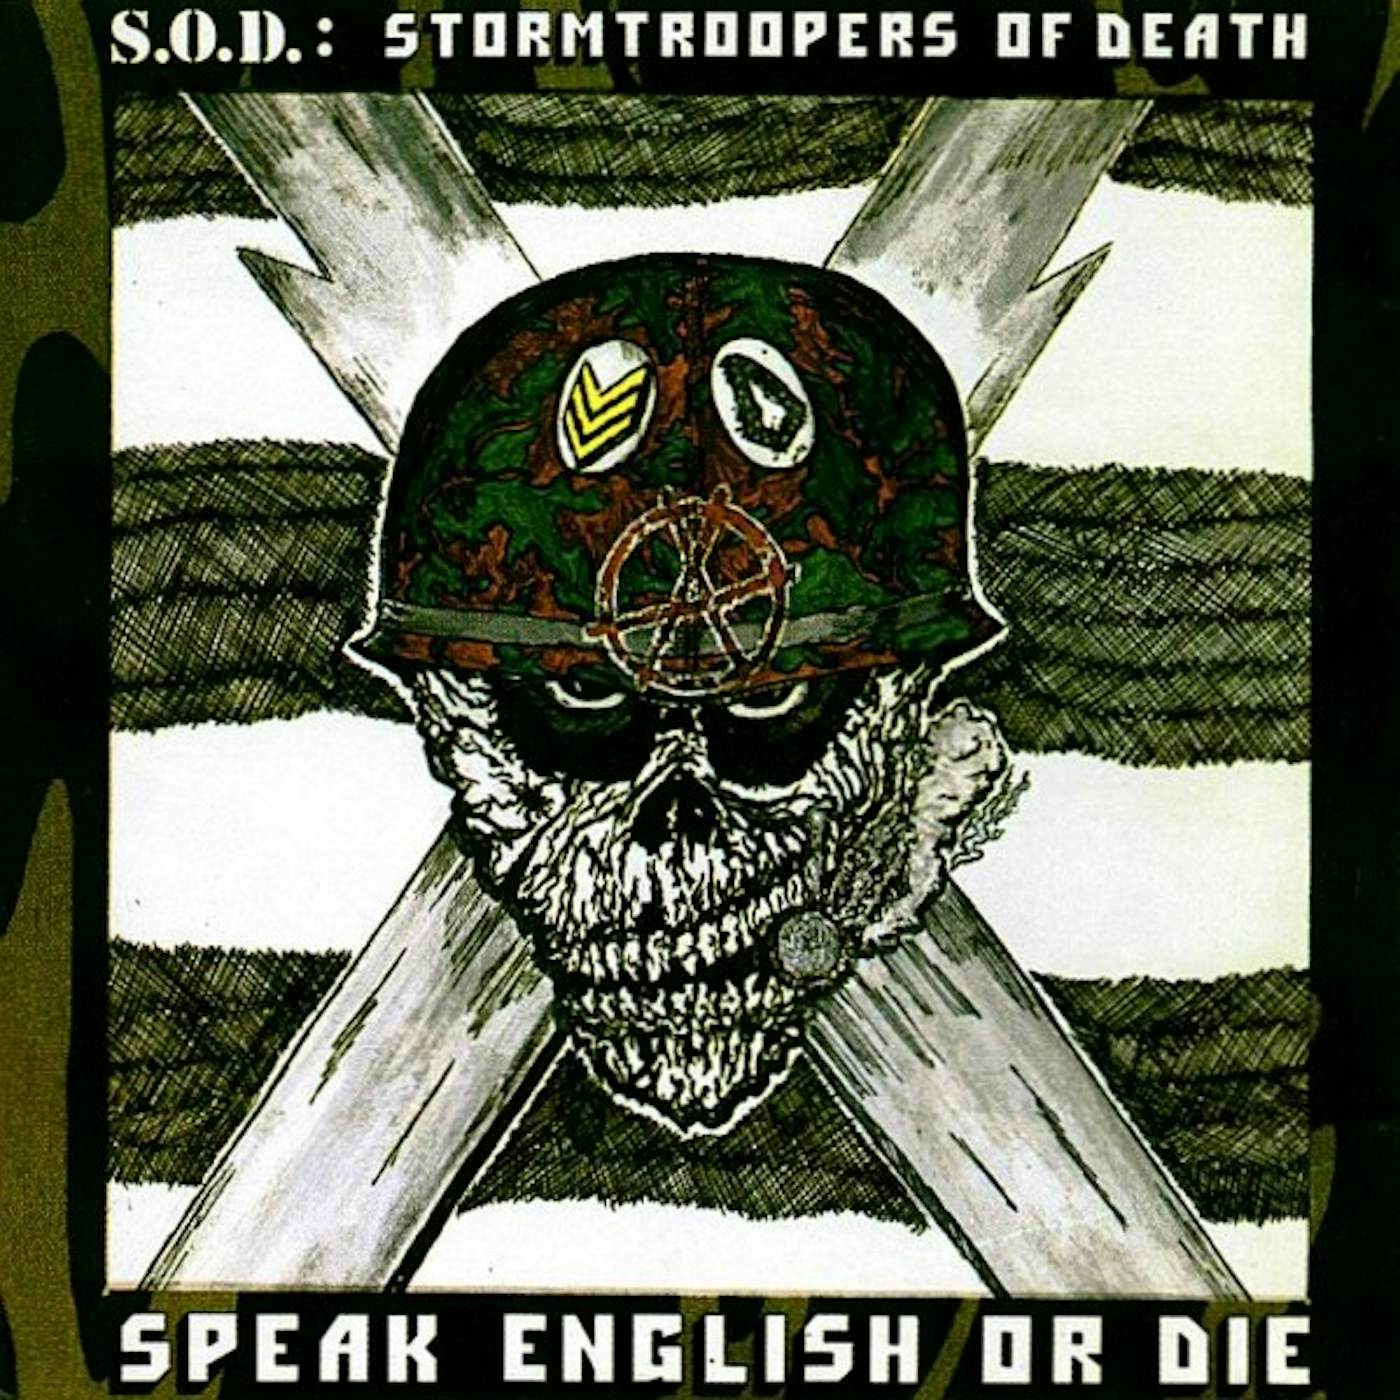 S.O.D. SPEAK ENGLISH DIE CD